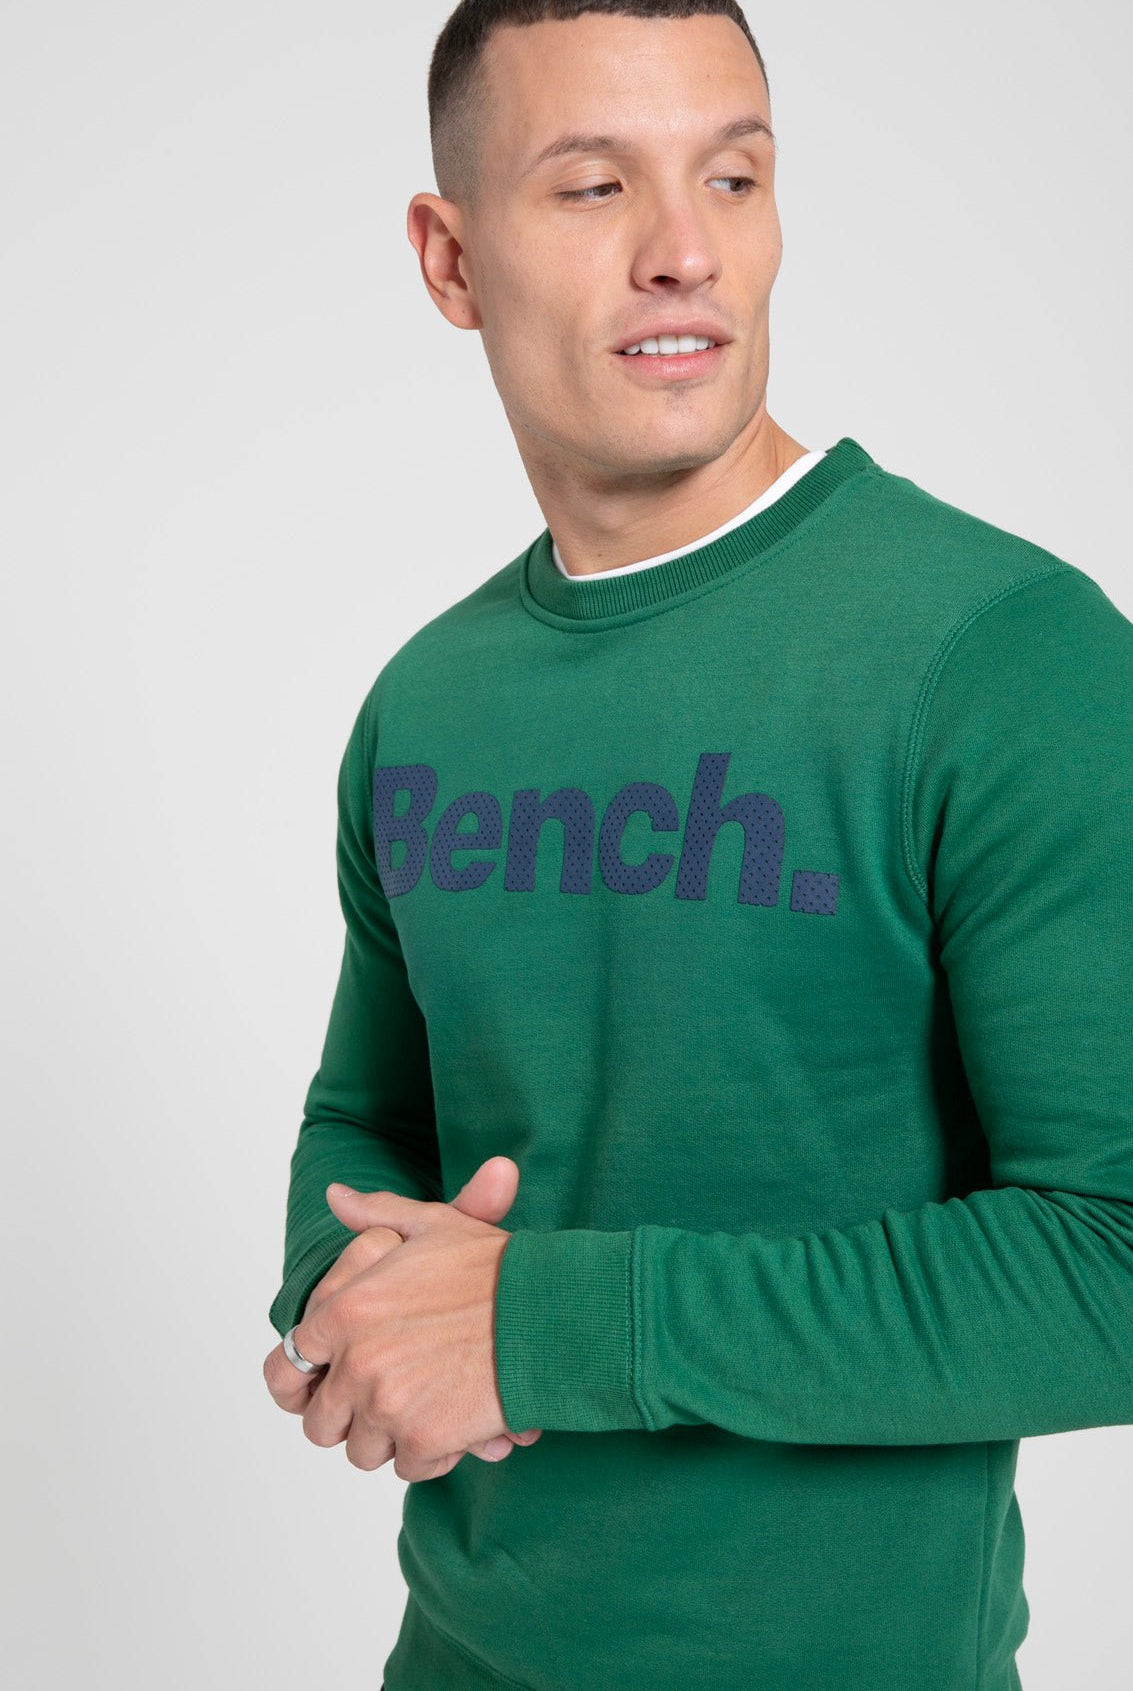 Mens 'TIPSTER' Spots Sweat - GREEN - Shop at www.Bench.co.uk #LoveMyHood